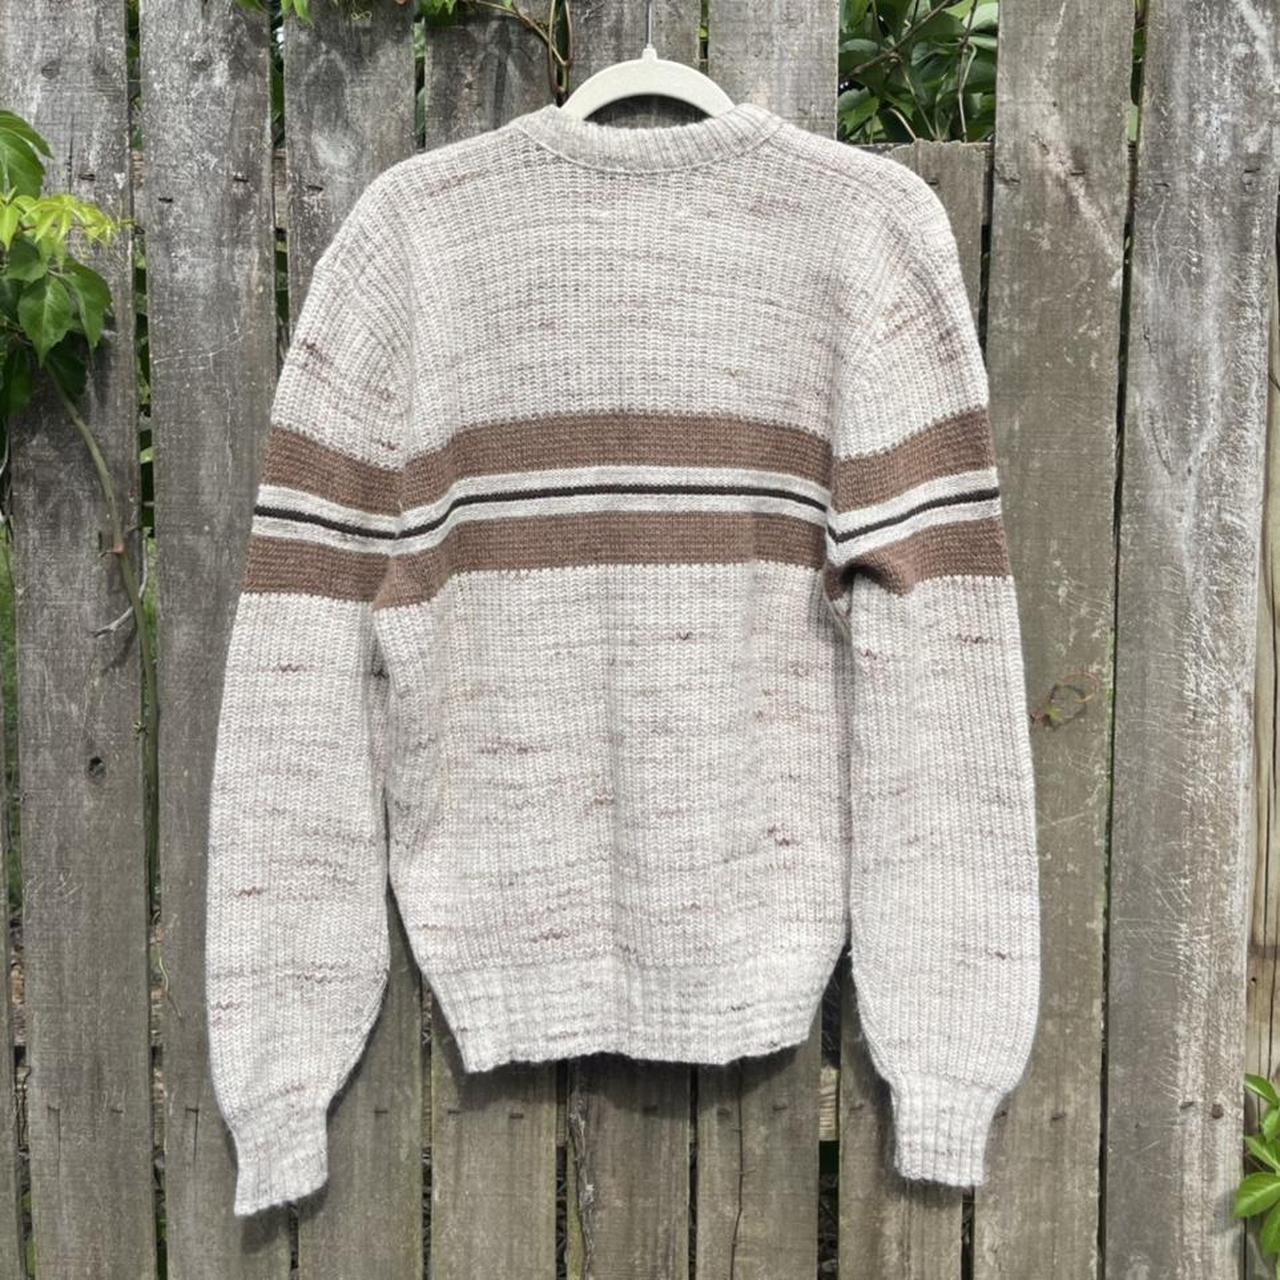 Panache Men's Cream and Brown Sweatshirt (3)